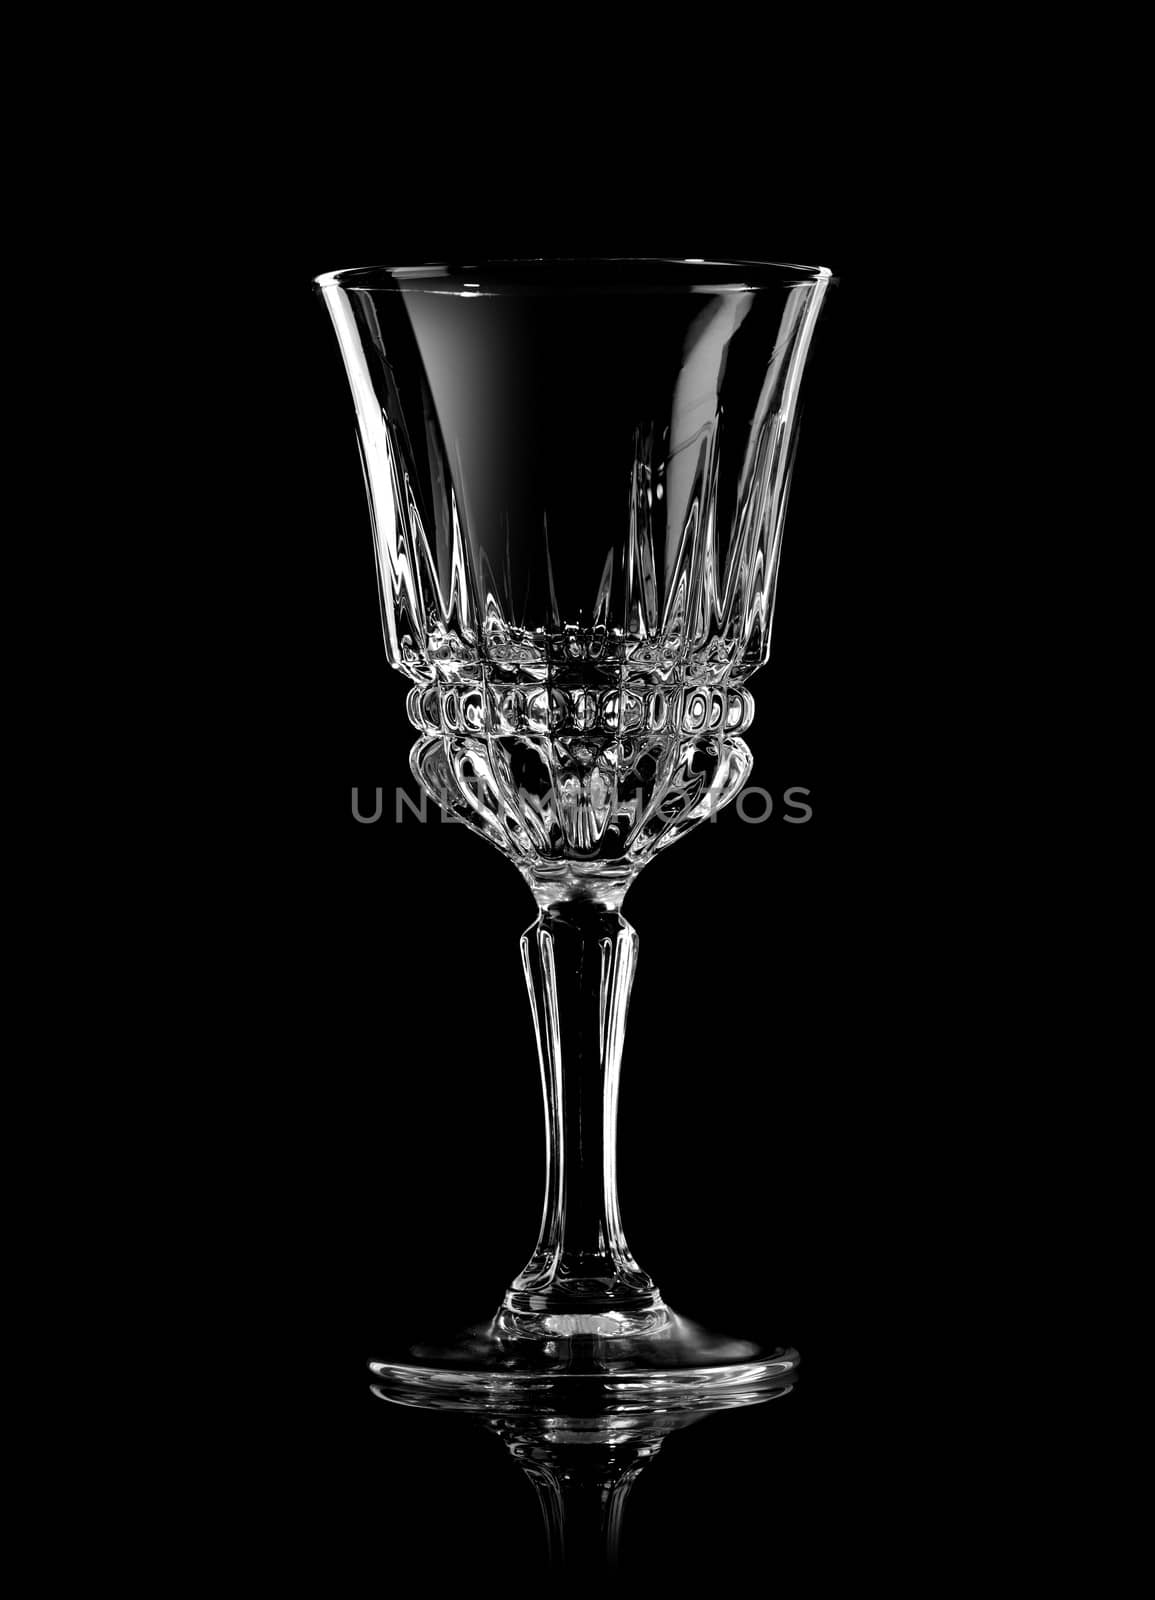 Empty wine glass on a black background